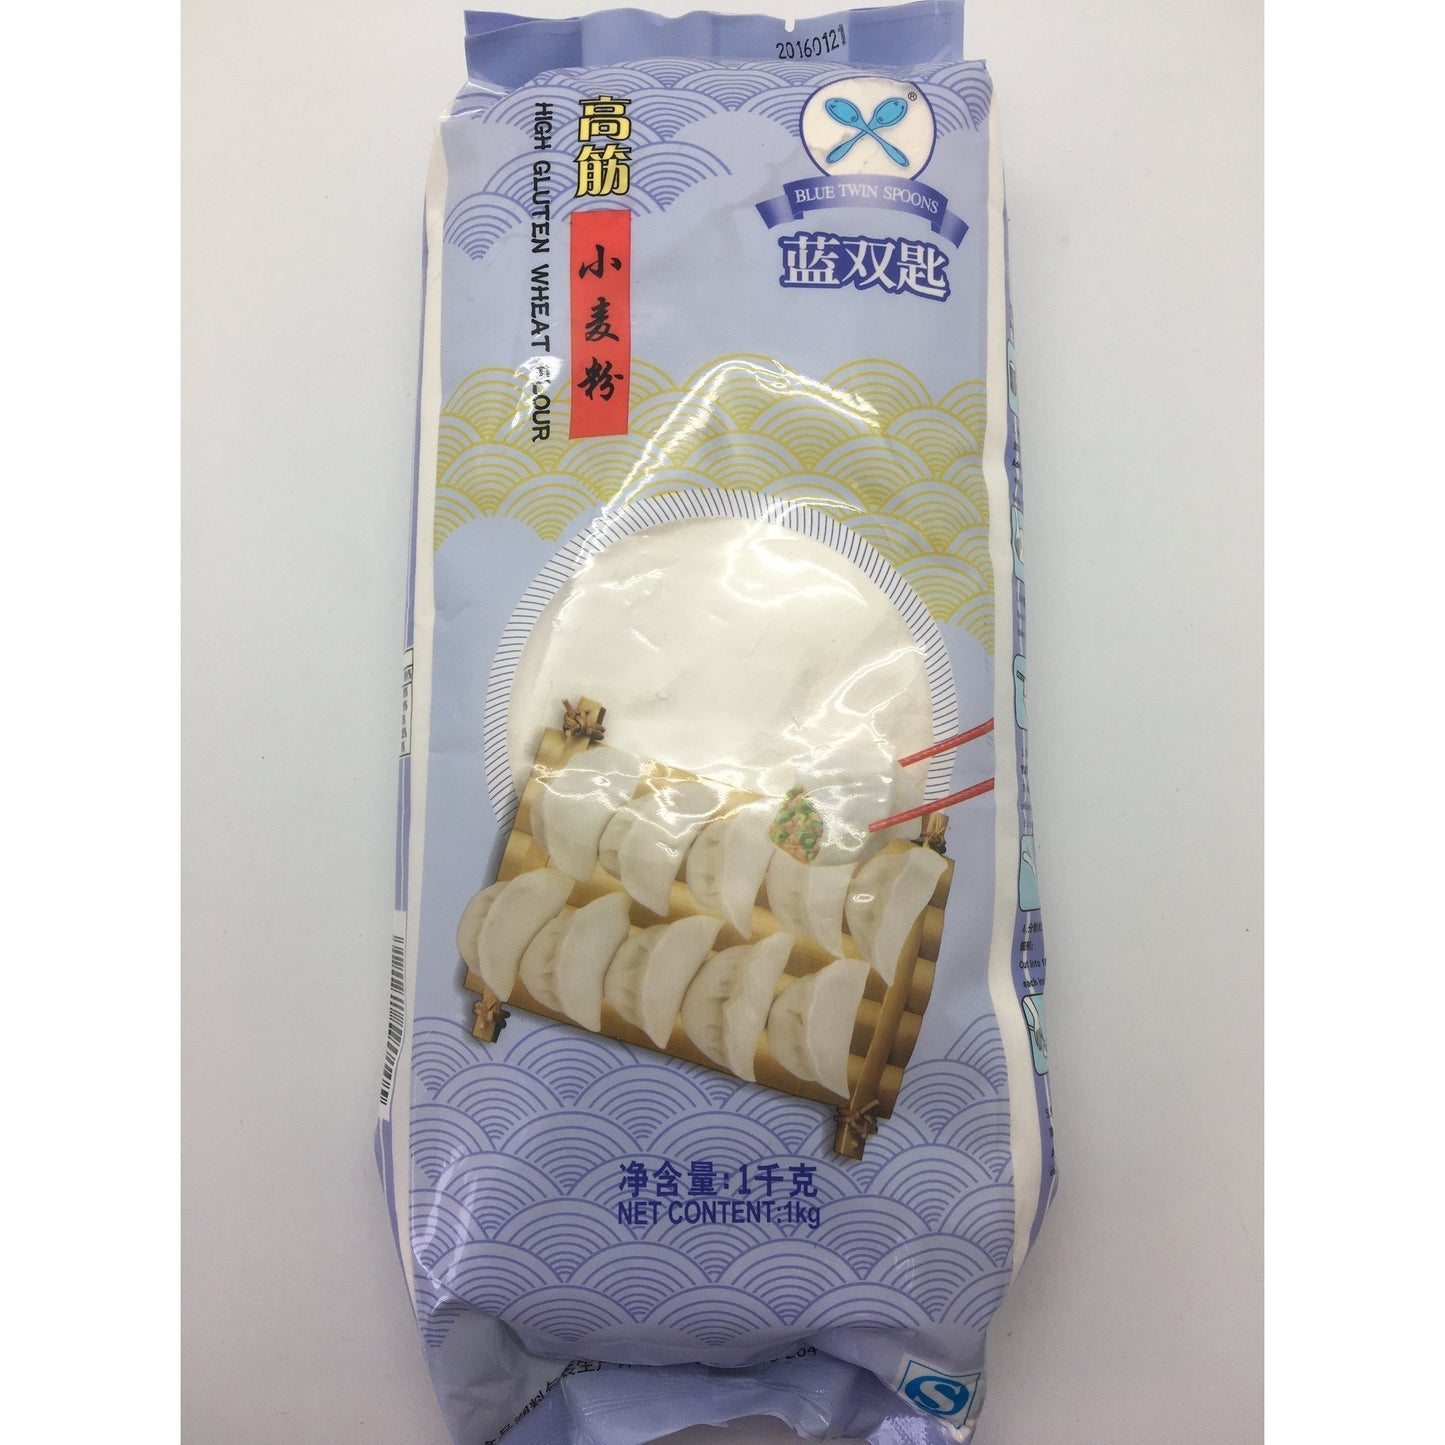 PD009D Blue Twin Spoons Brand - High Gluten Wheat Flour 1kg - 10 bags / 1 CTN - New Eastland Pty Ltd - Asian food wholesalers